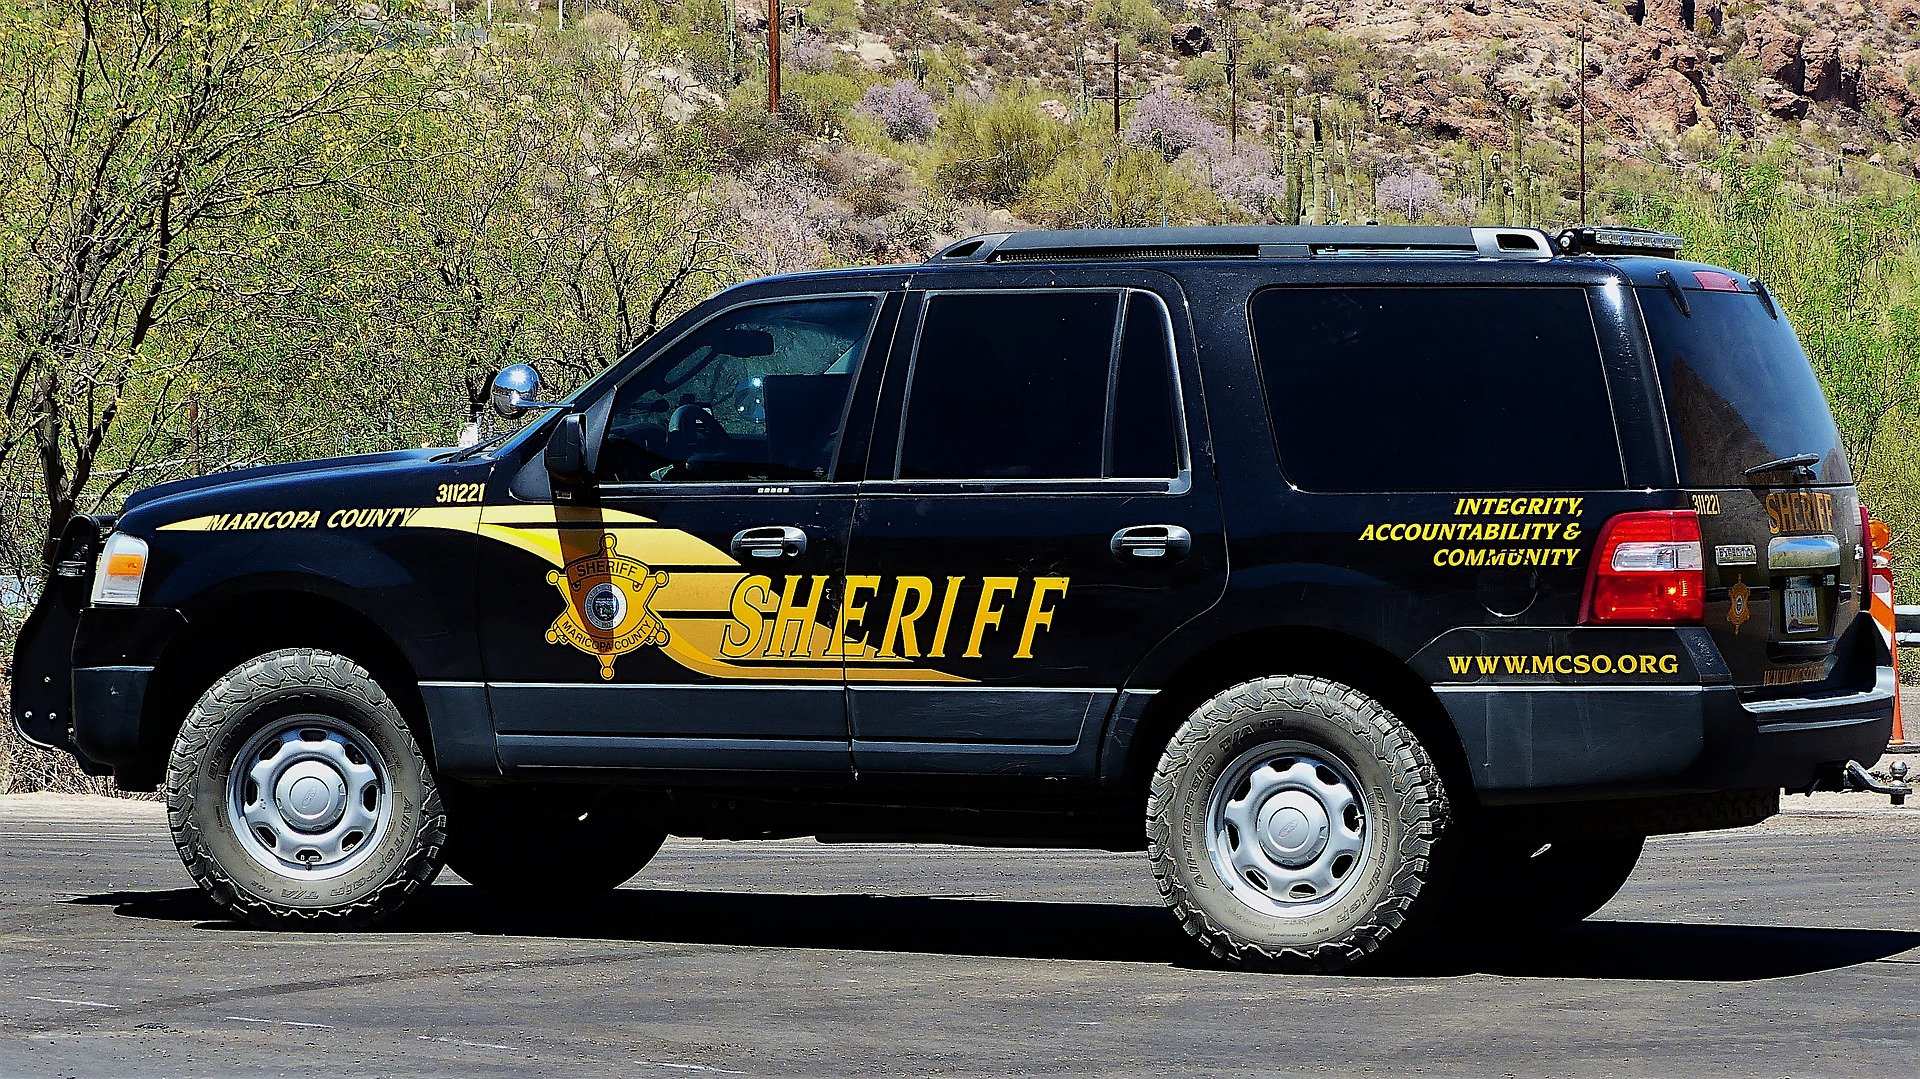 A Sheriff's police vehicle | Source: Pixabay